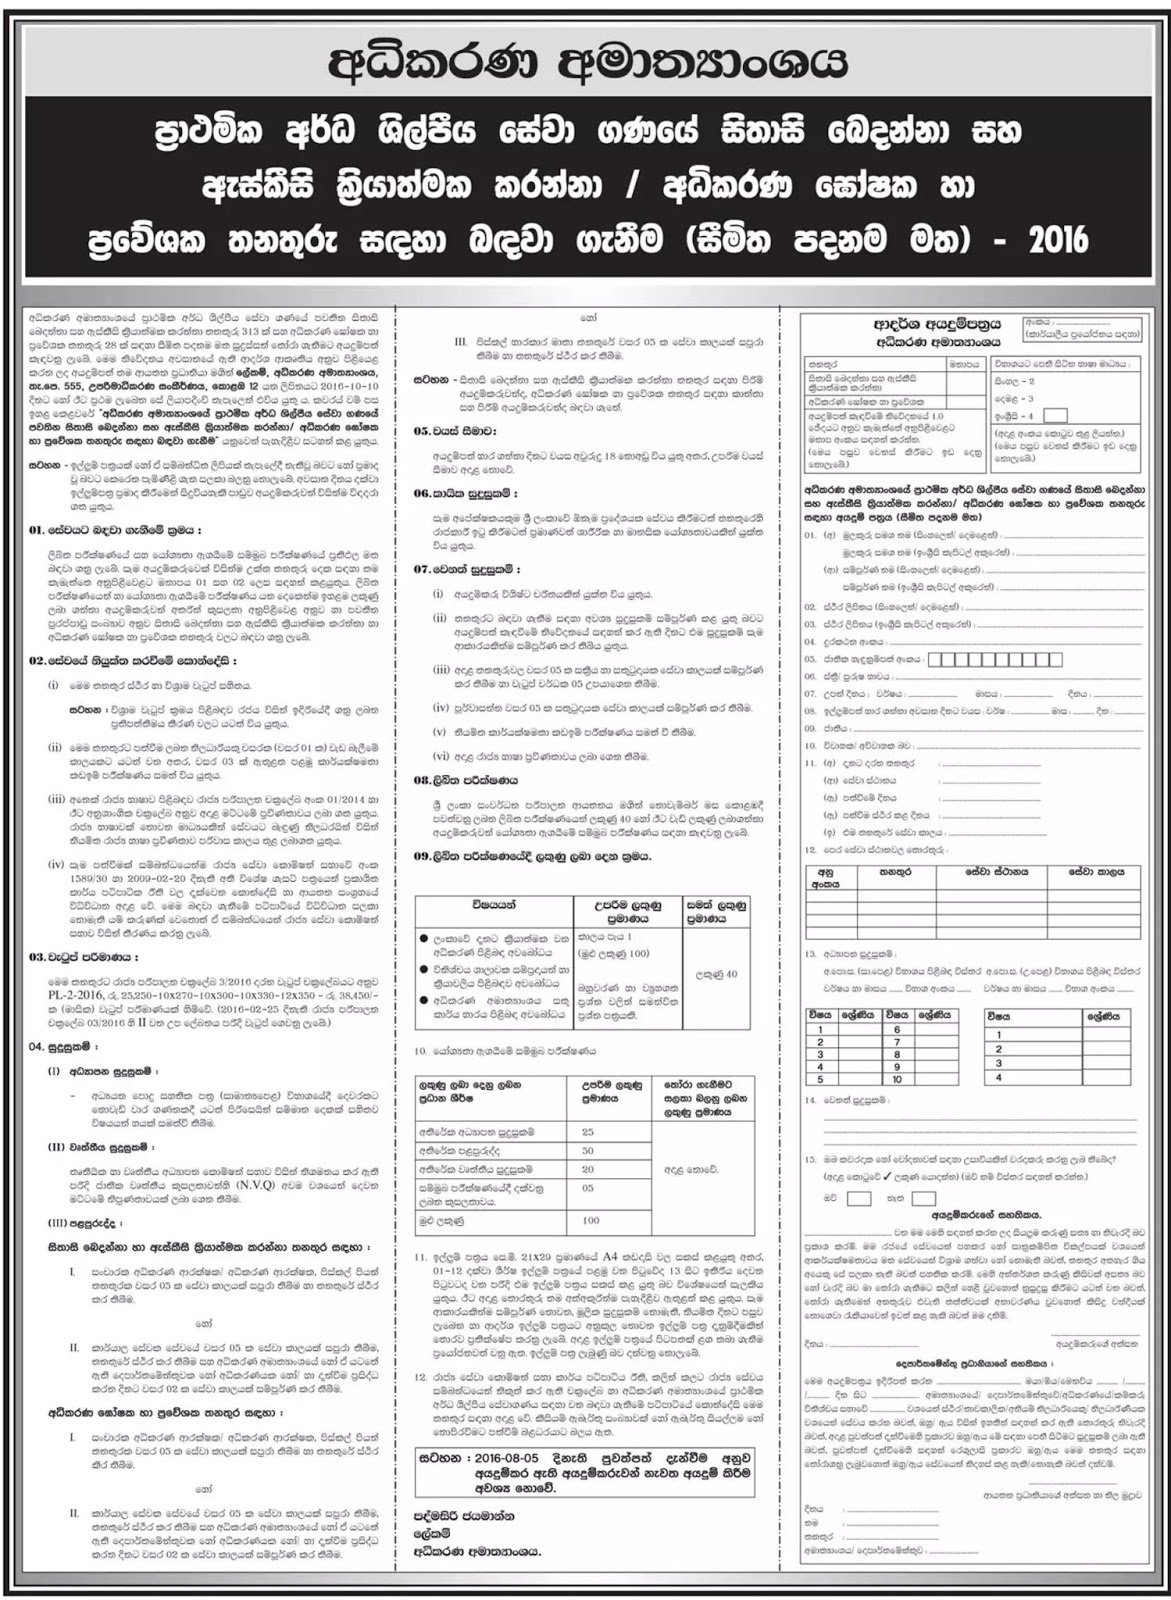 Ministry of Justice Sri Lanka Vacancies